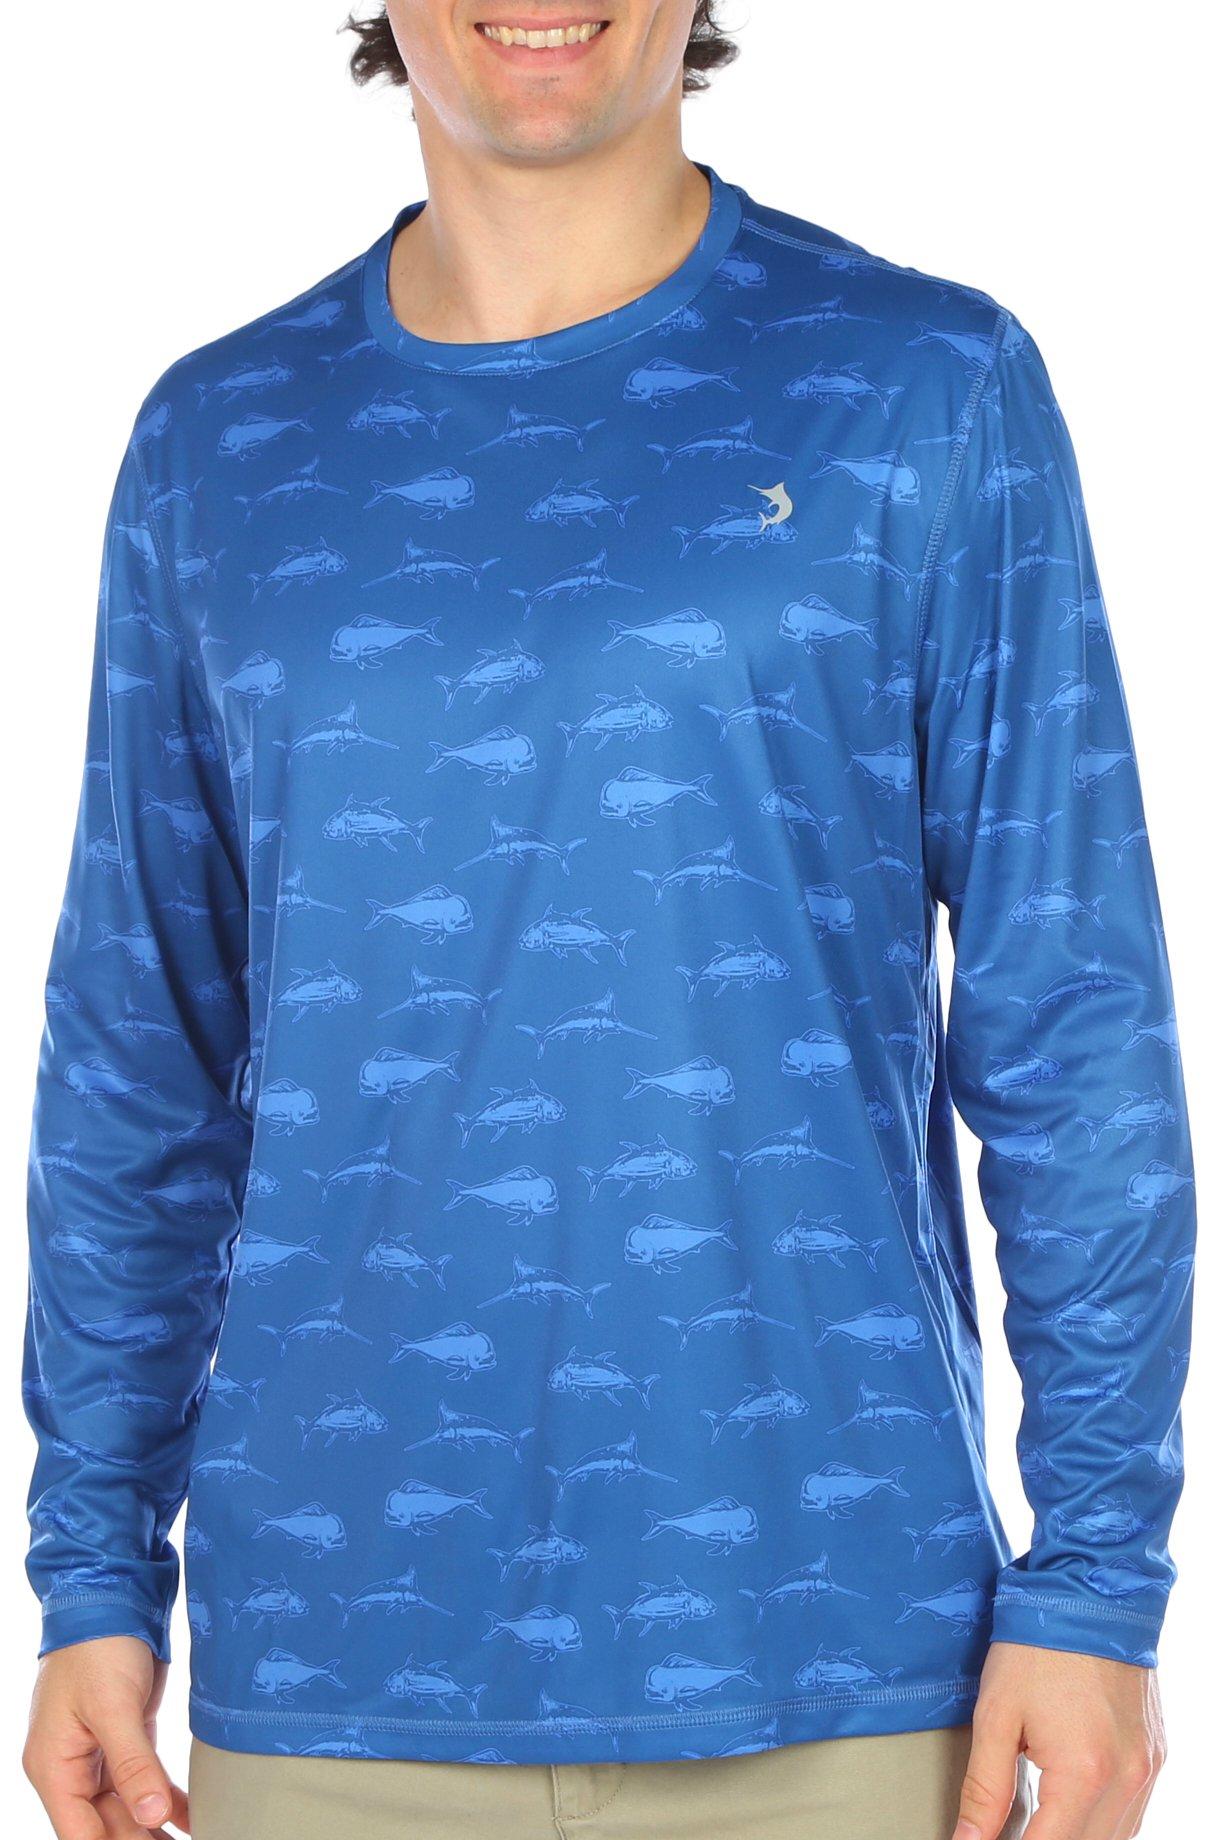 Reel Legends Mens Blue Washout Reel-Tec Long Sleeve T-Shirt - Blue - Large